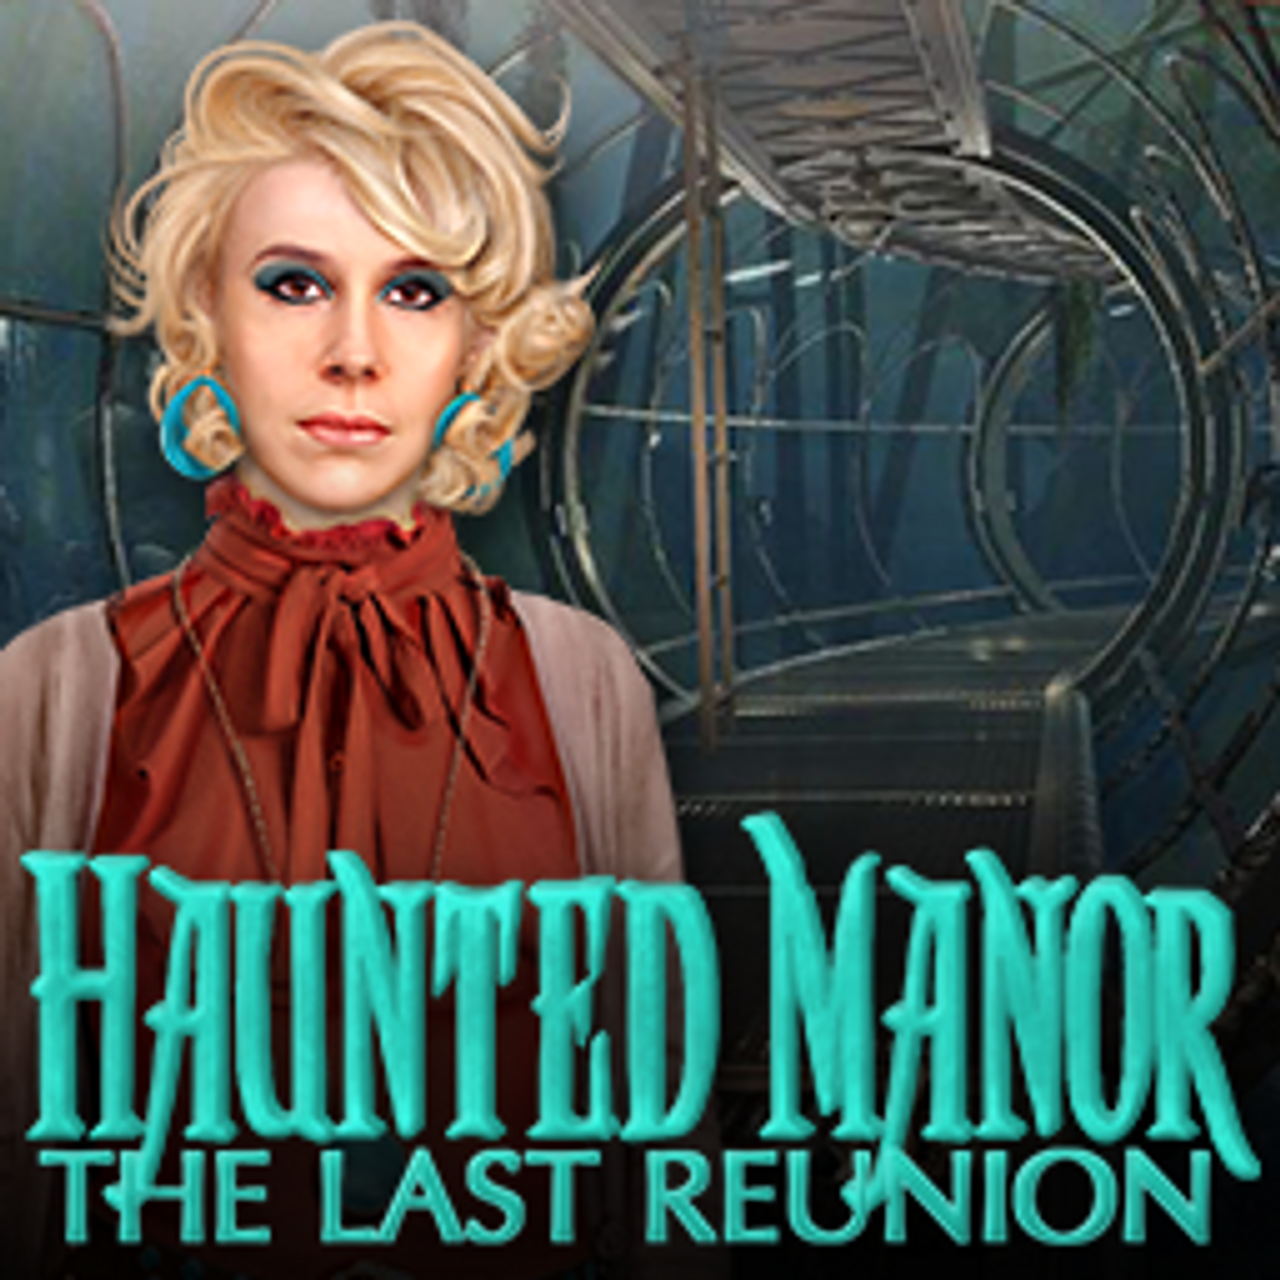 Haunted Manor: The Last Reunion